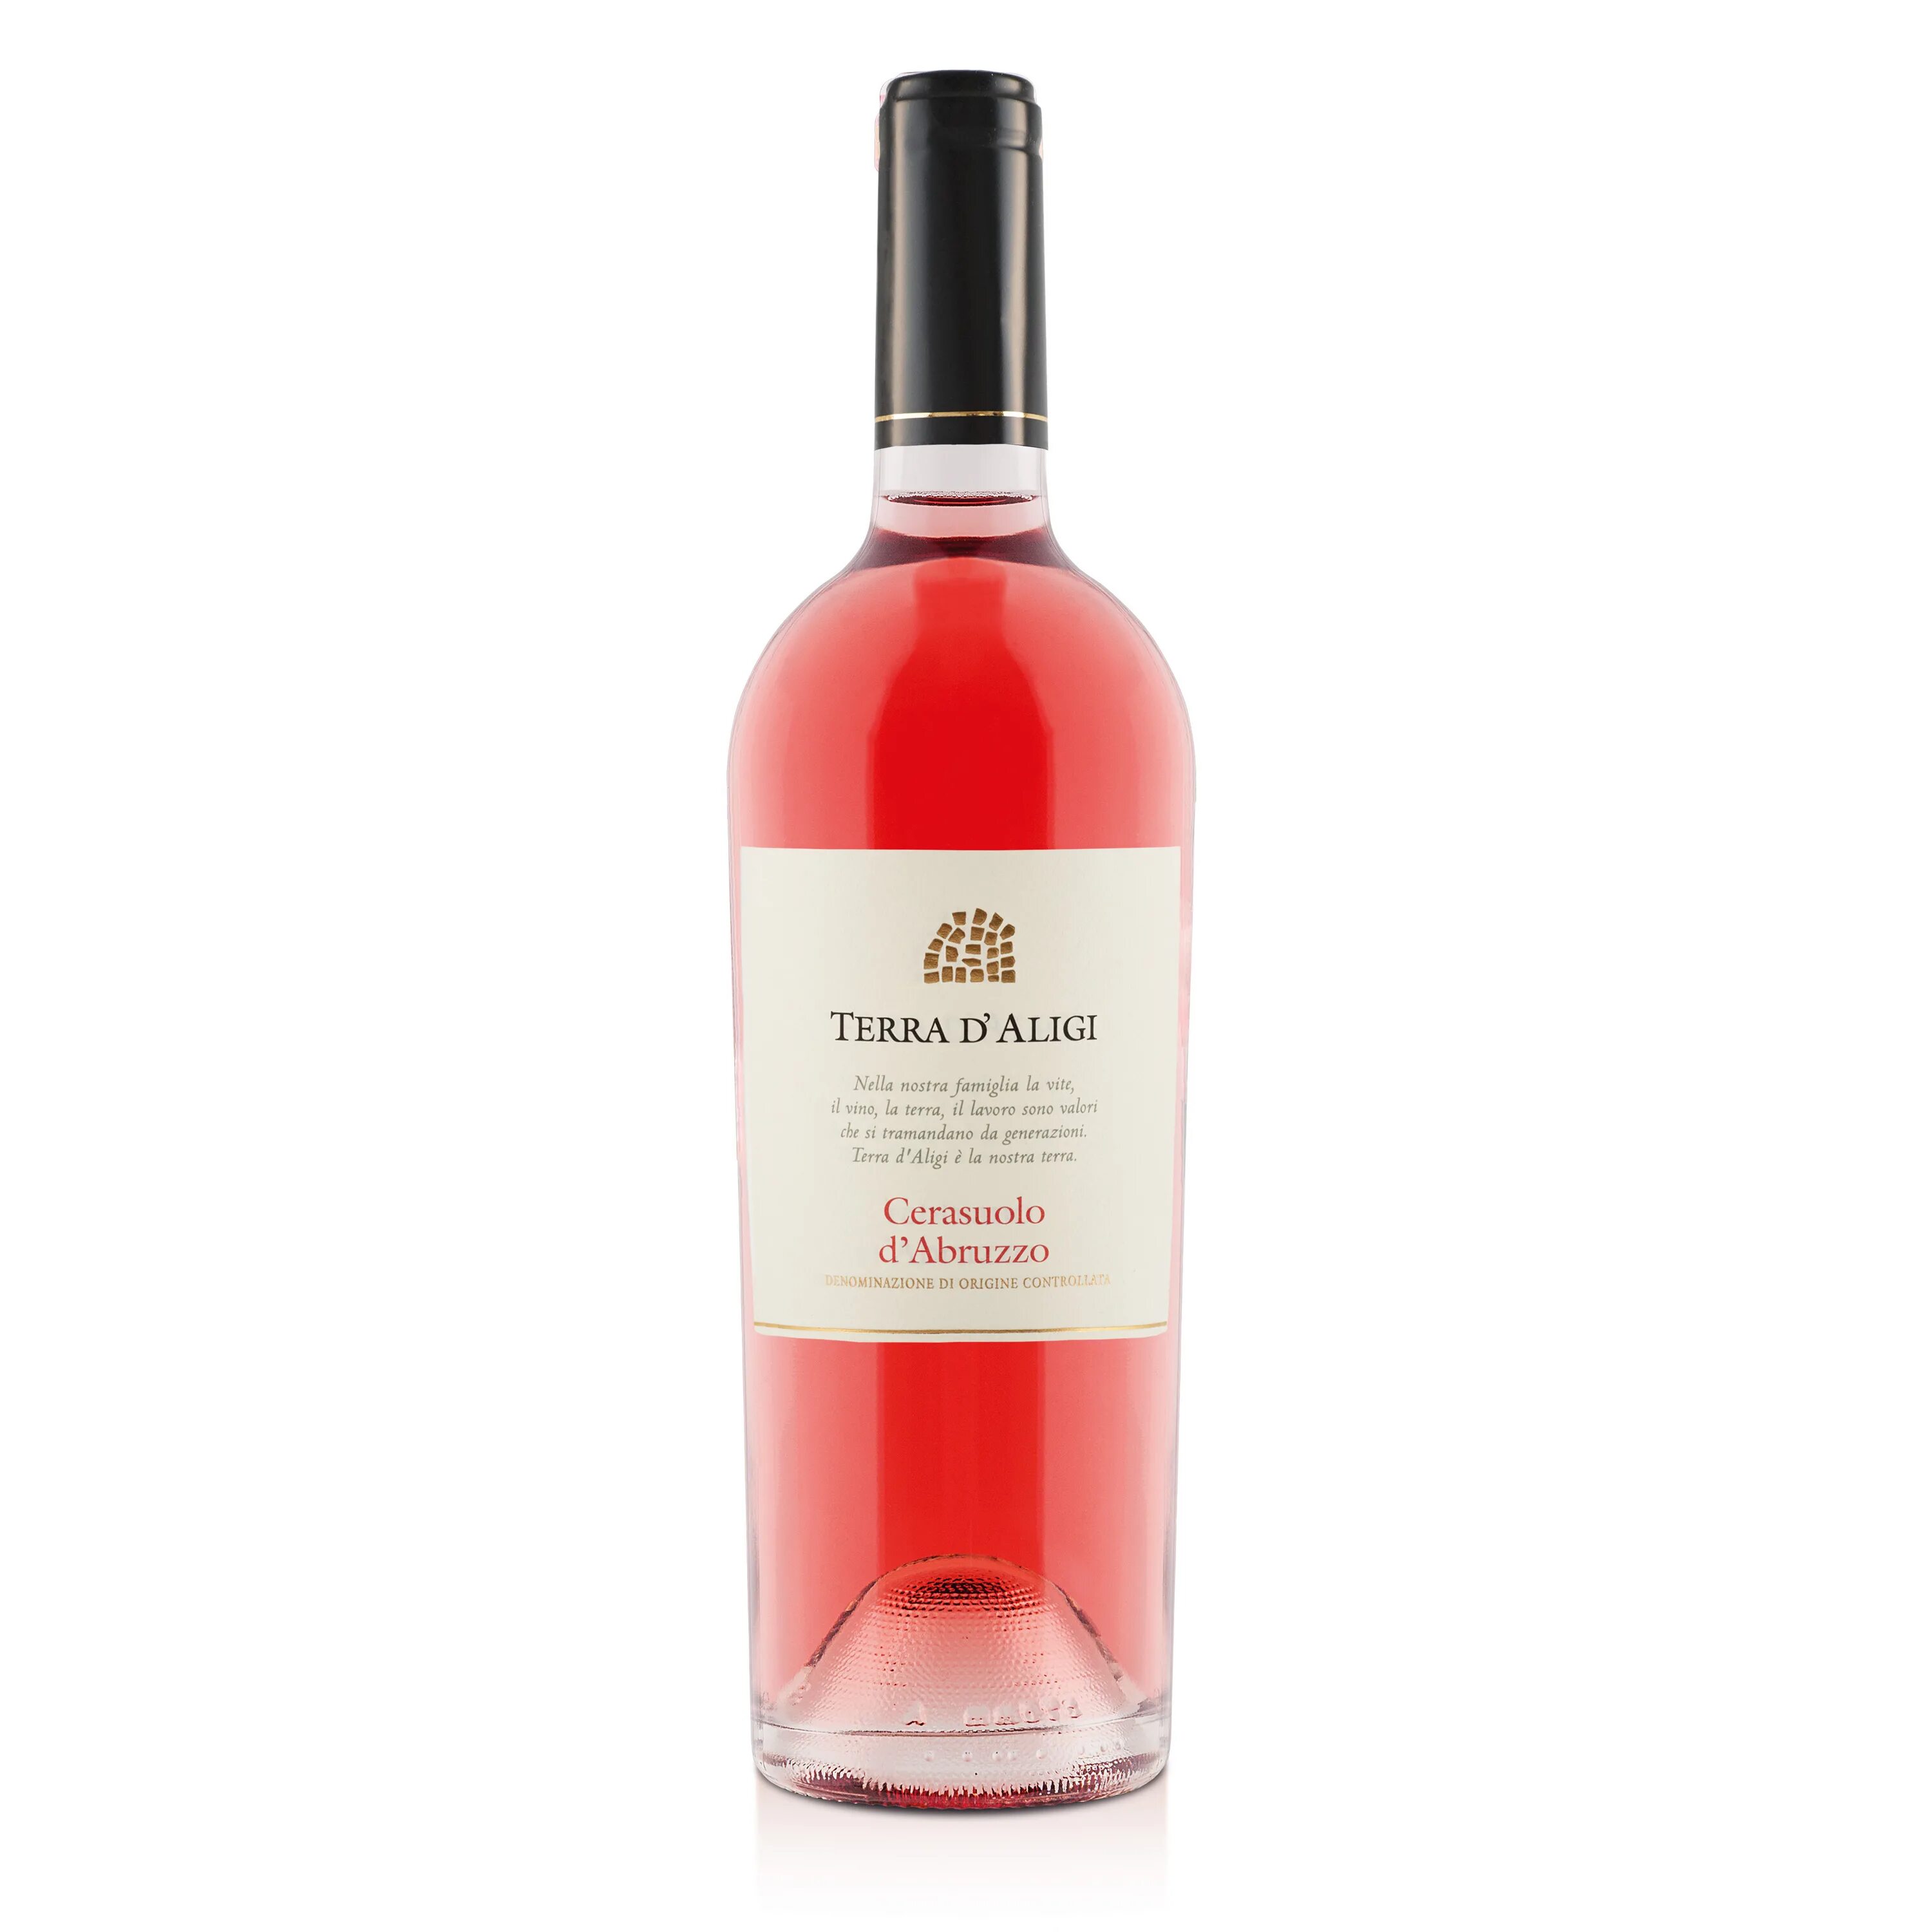 Розовые вина испании. Cerasuolo d'Abruzzo. Вино Cerasuolo. Montecarlo Rose вино Италия. Розовое вино Италия.